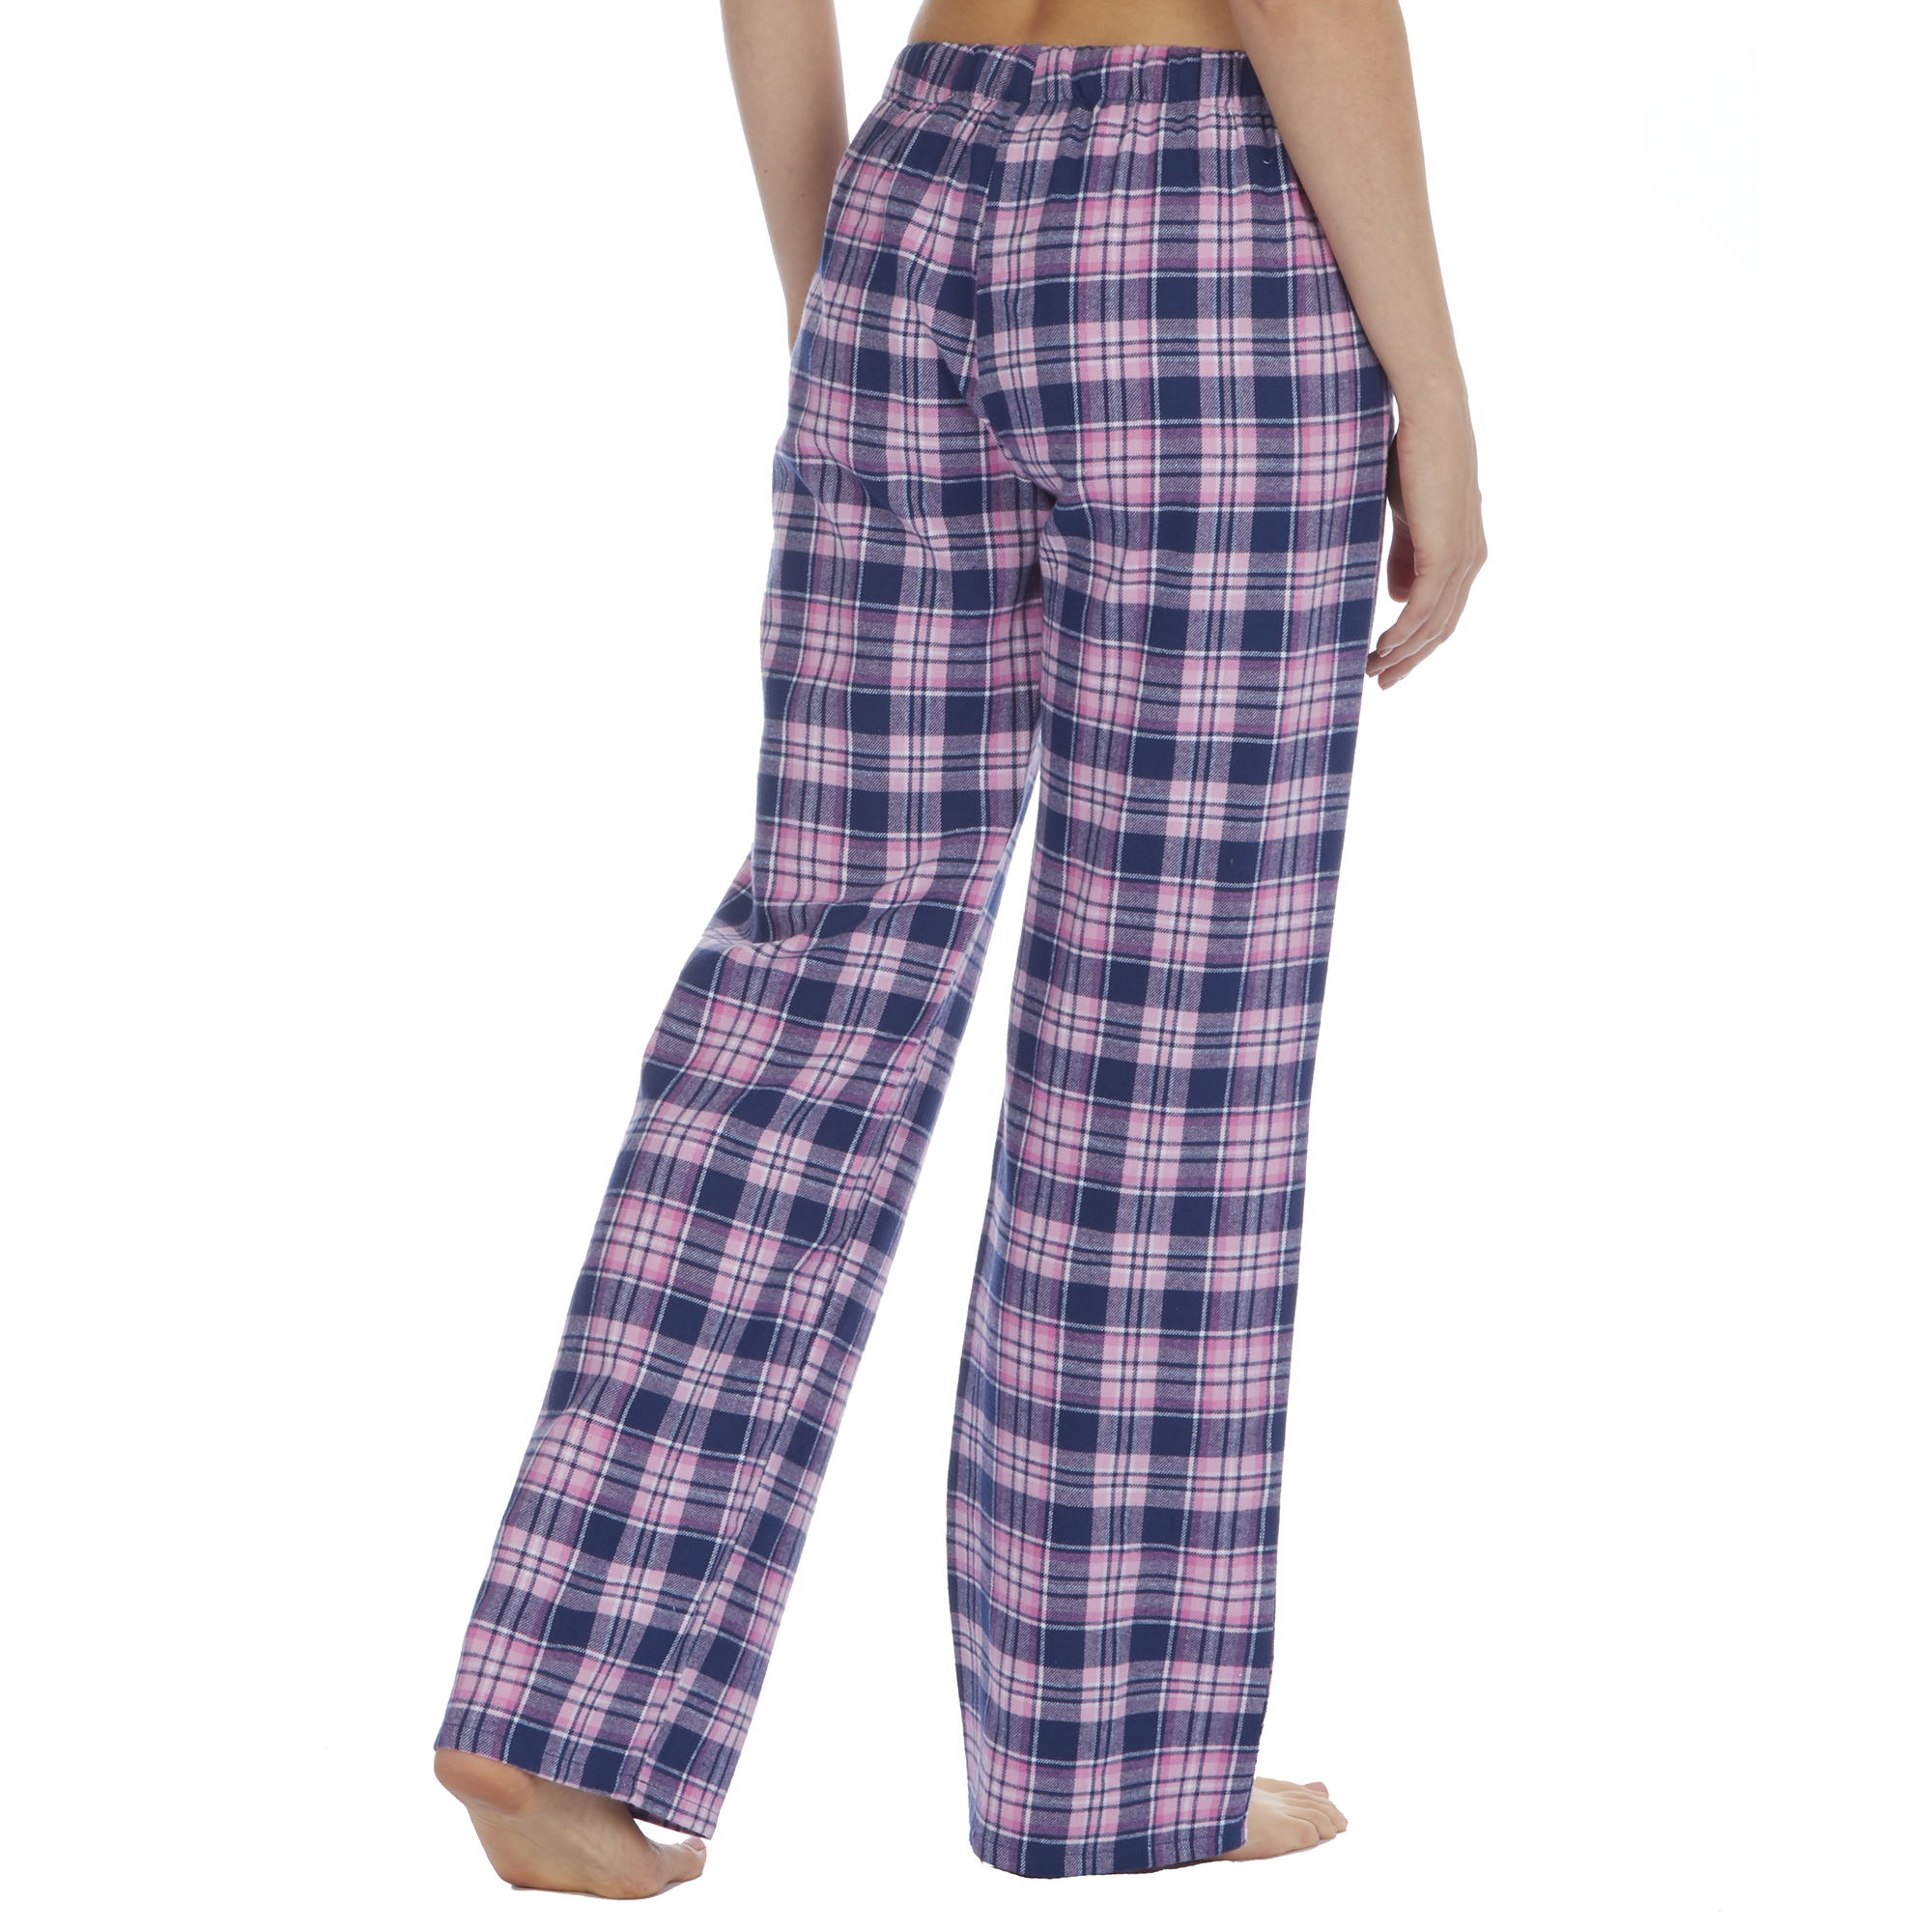 Ladies Womens Pyjama Pants Nightwear Lounge Cotton Check Pattern Flannel Thermal  eBay